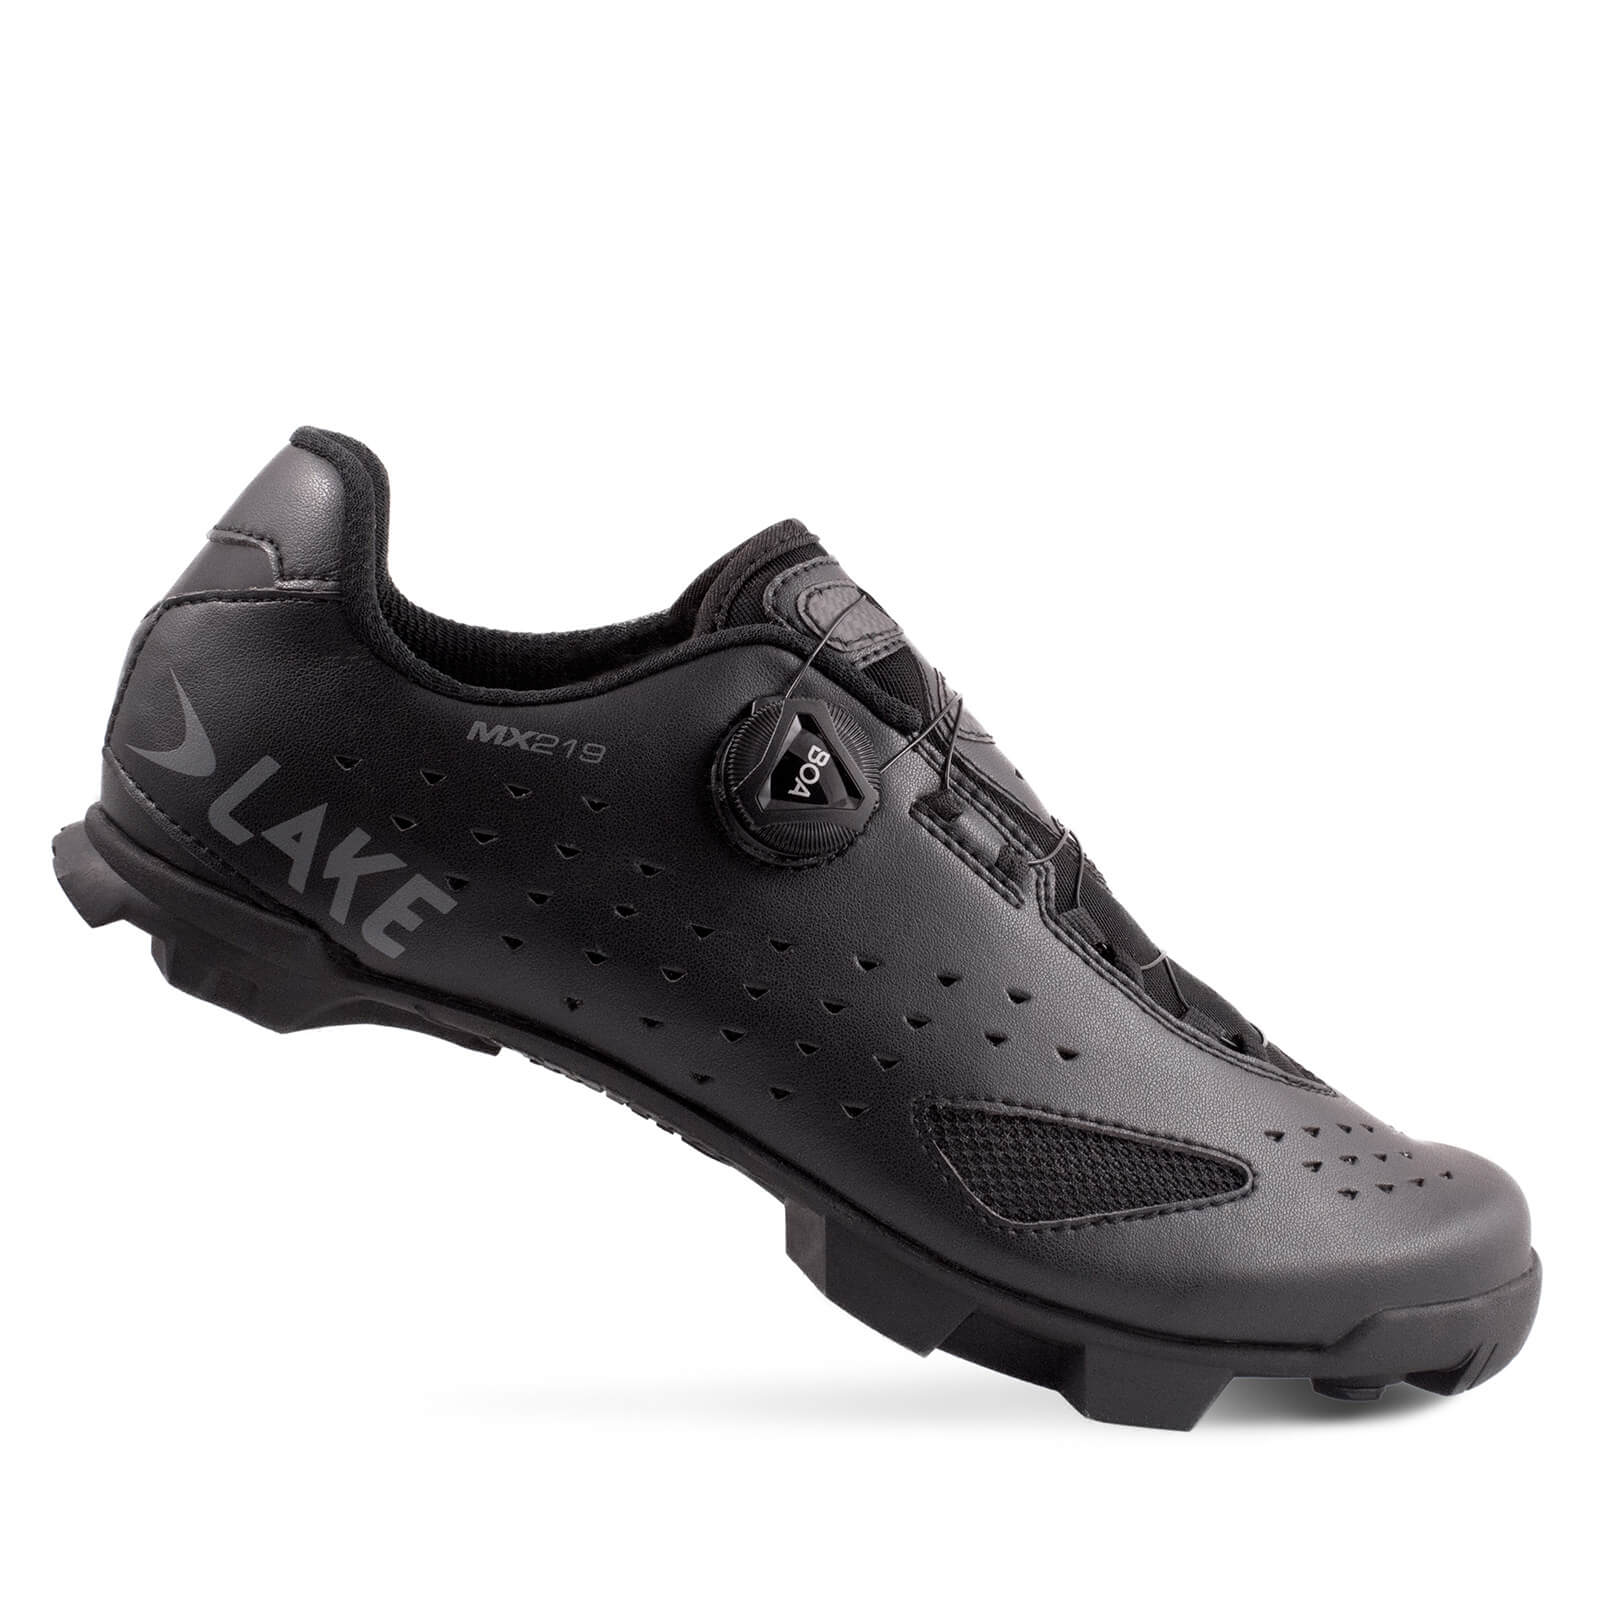 Lake MX219 MTB Shoes - EU45 - Black